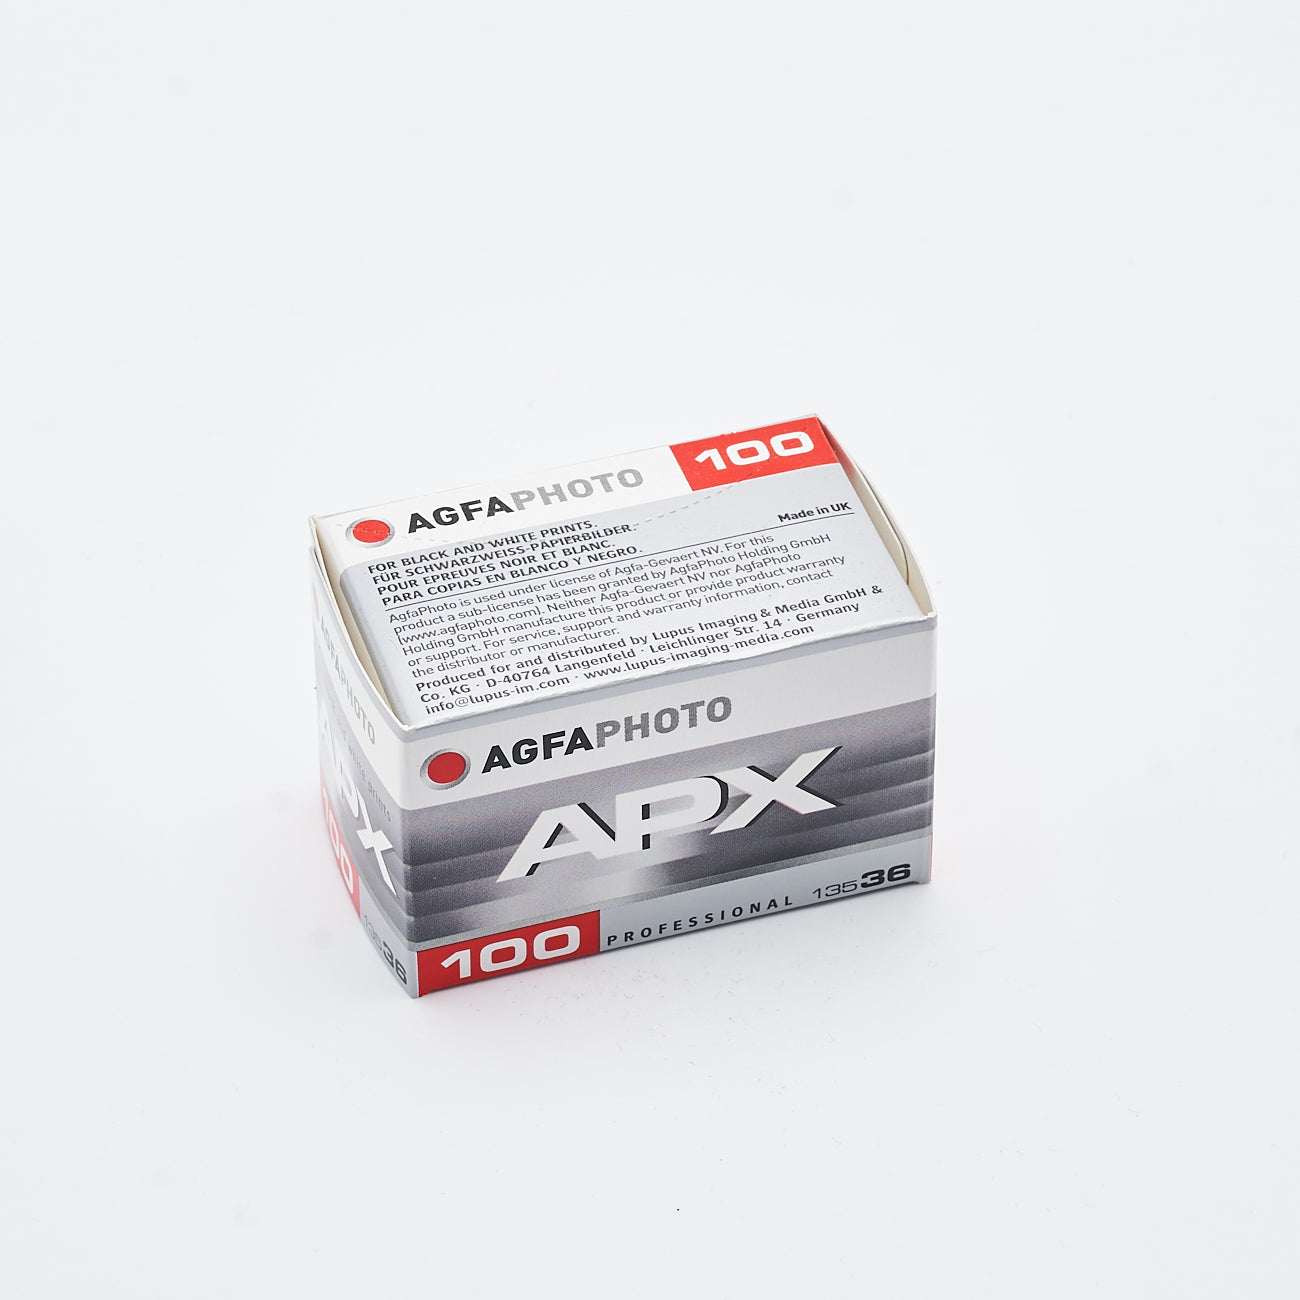 AGFAPHOTO APX 100 SW-Negativfilm 135-36 (Kleinbild)